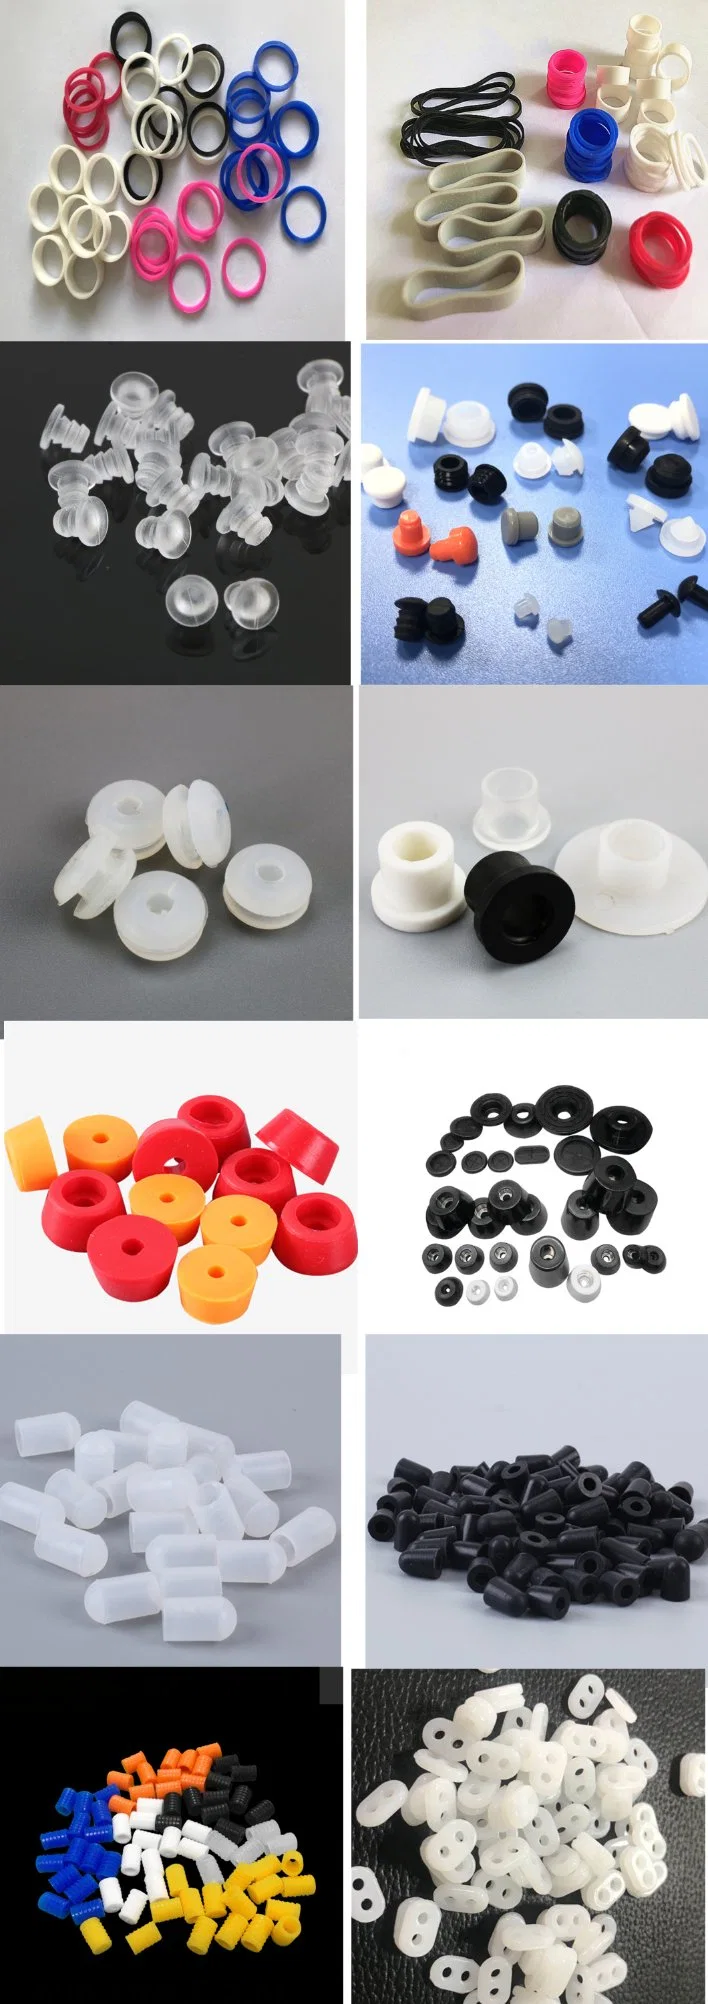 Custom Design Silicon Rubber Mold Vacuum Casting Silicone Molding Plastic Electric Forming Parts